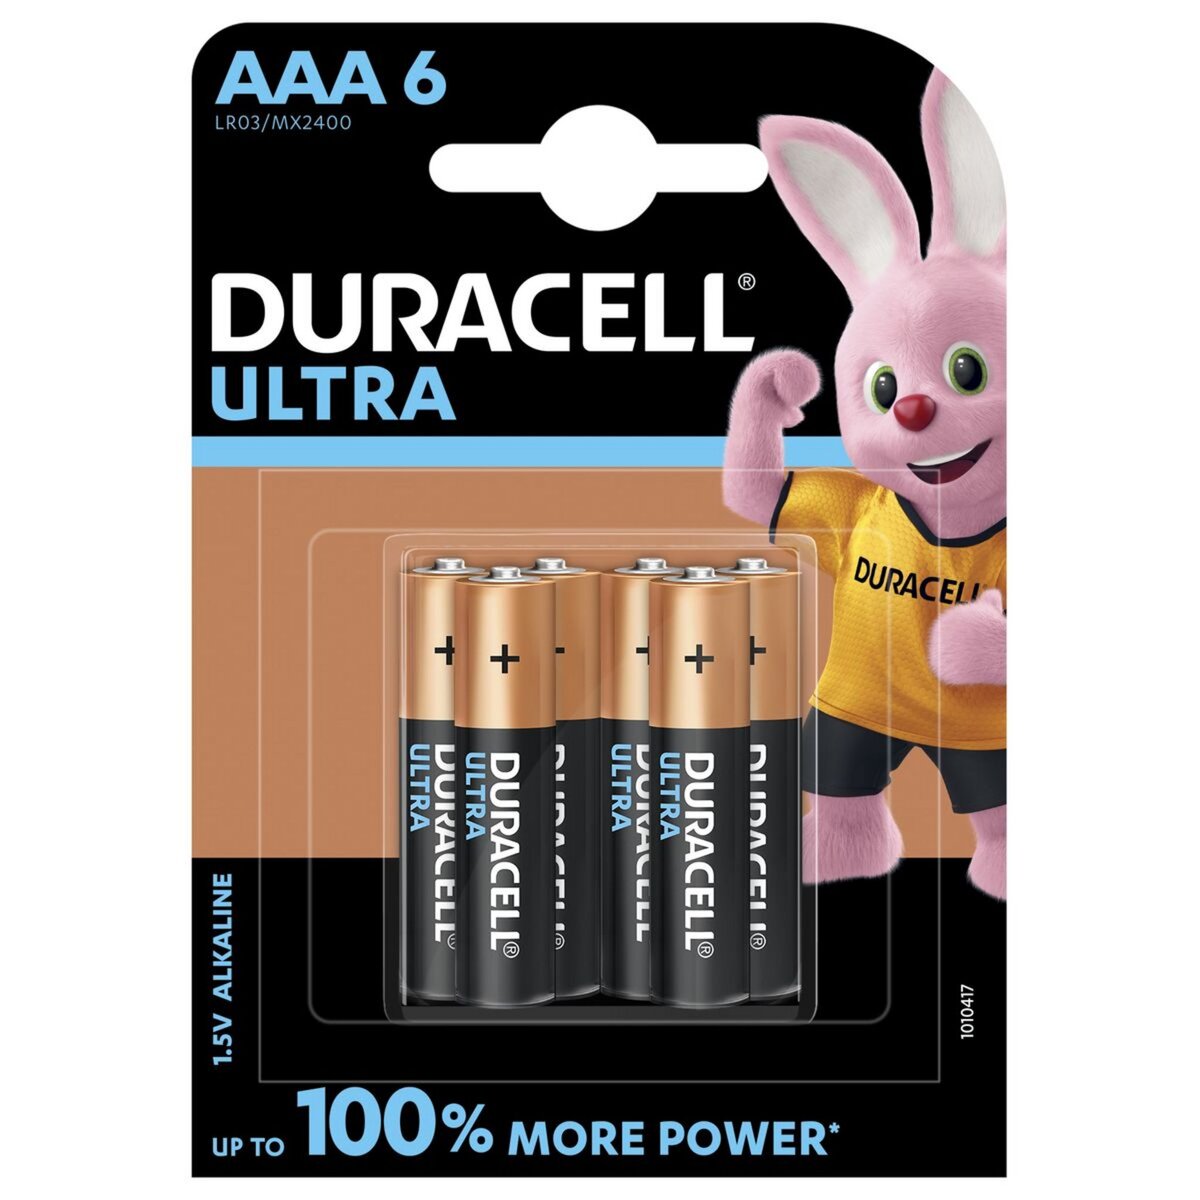 DURACELL Piles AAA/LR03 alcalines 1.5V ultra power pas cher 